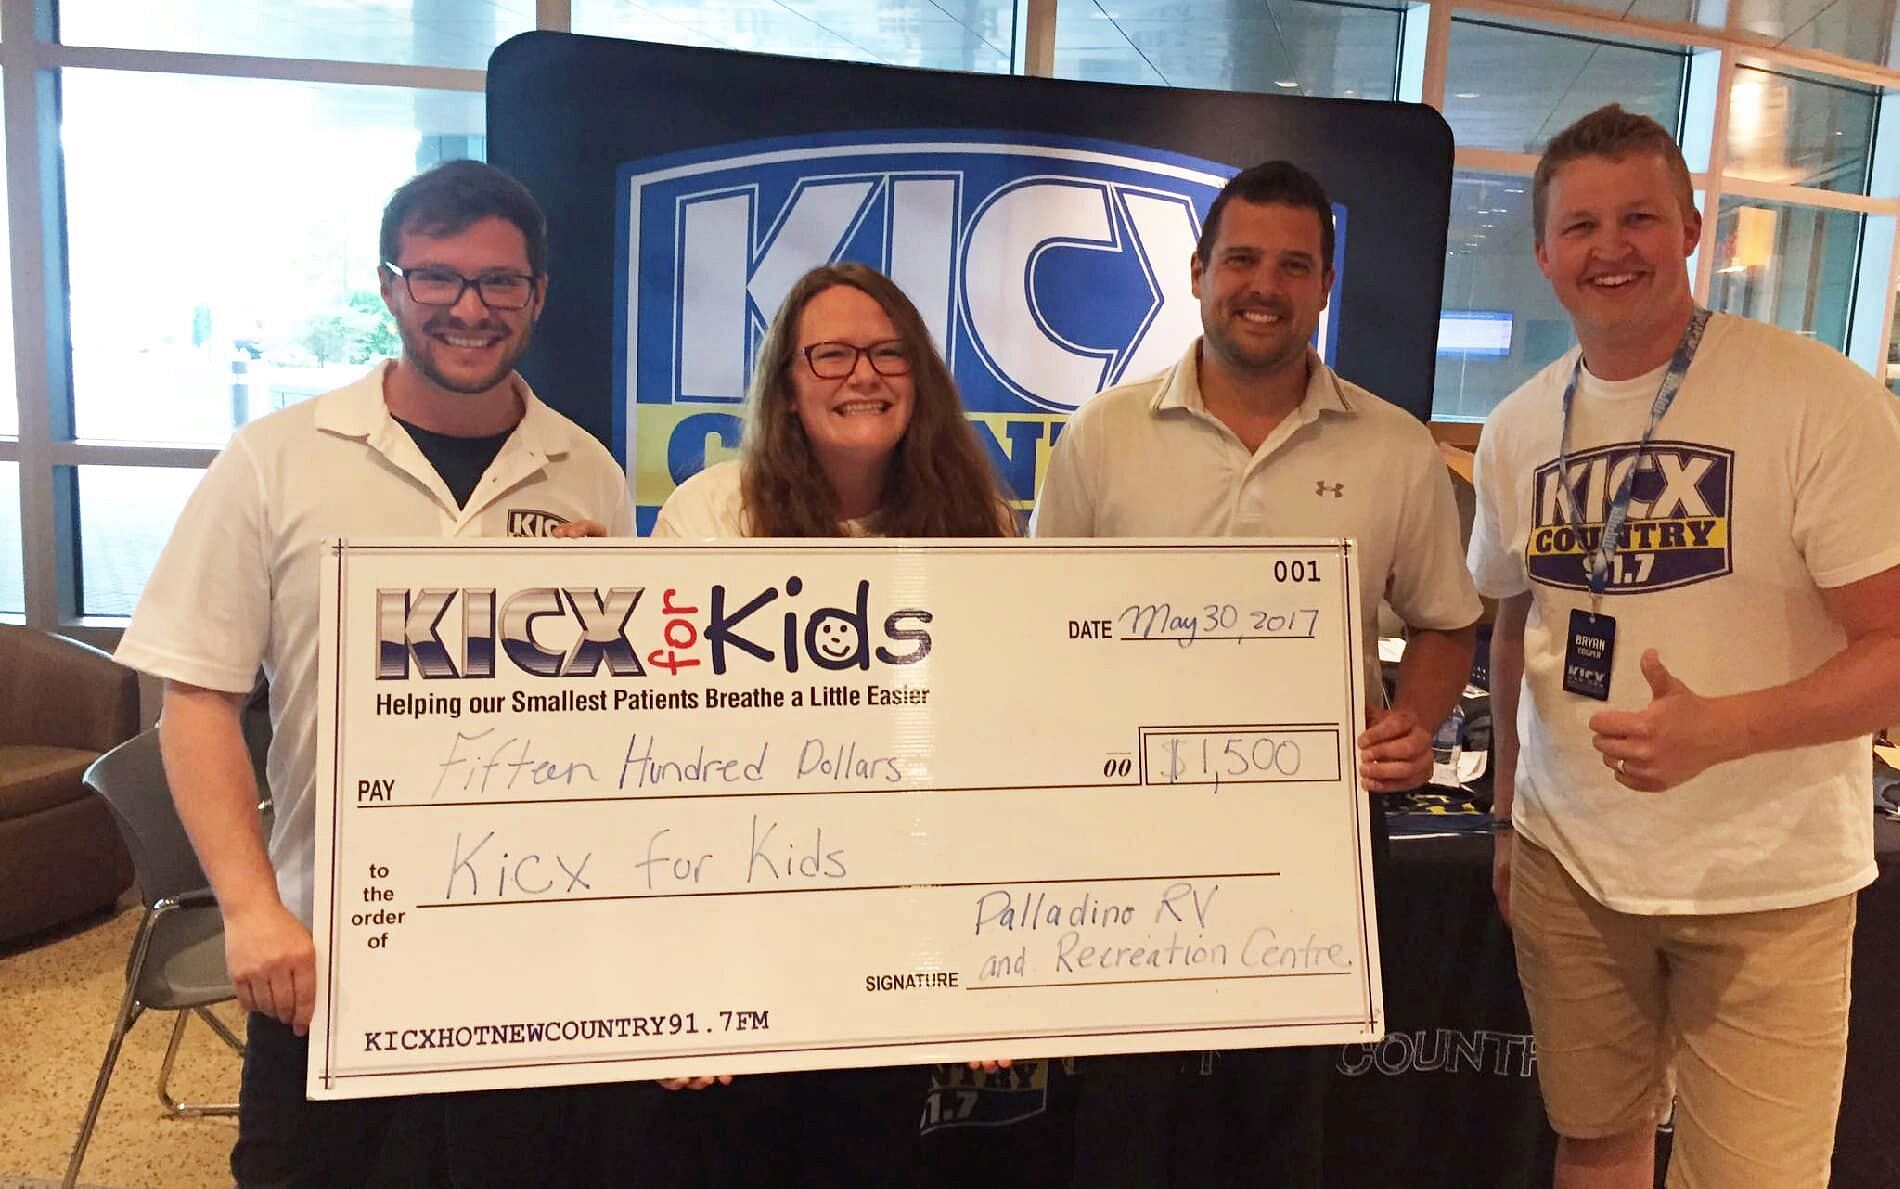 KICX For Kids Donation from Palladino RV & Recreation Centre Honda